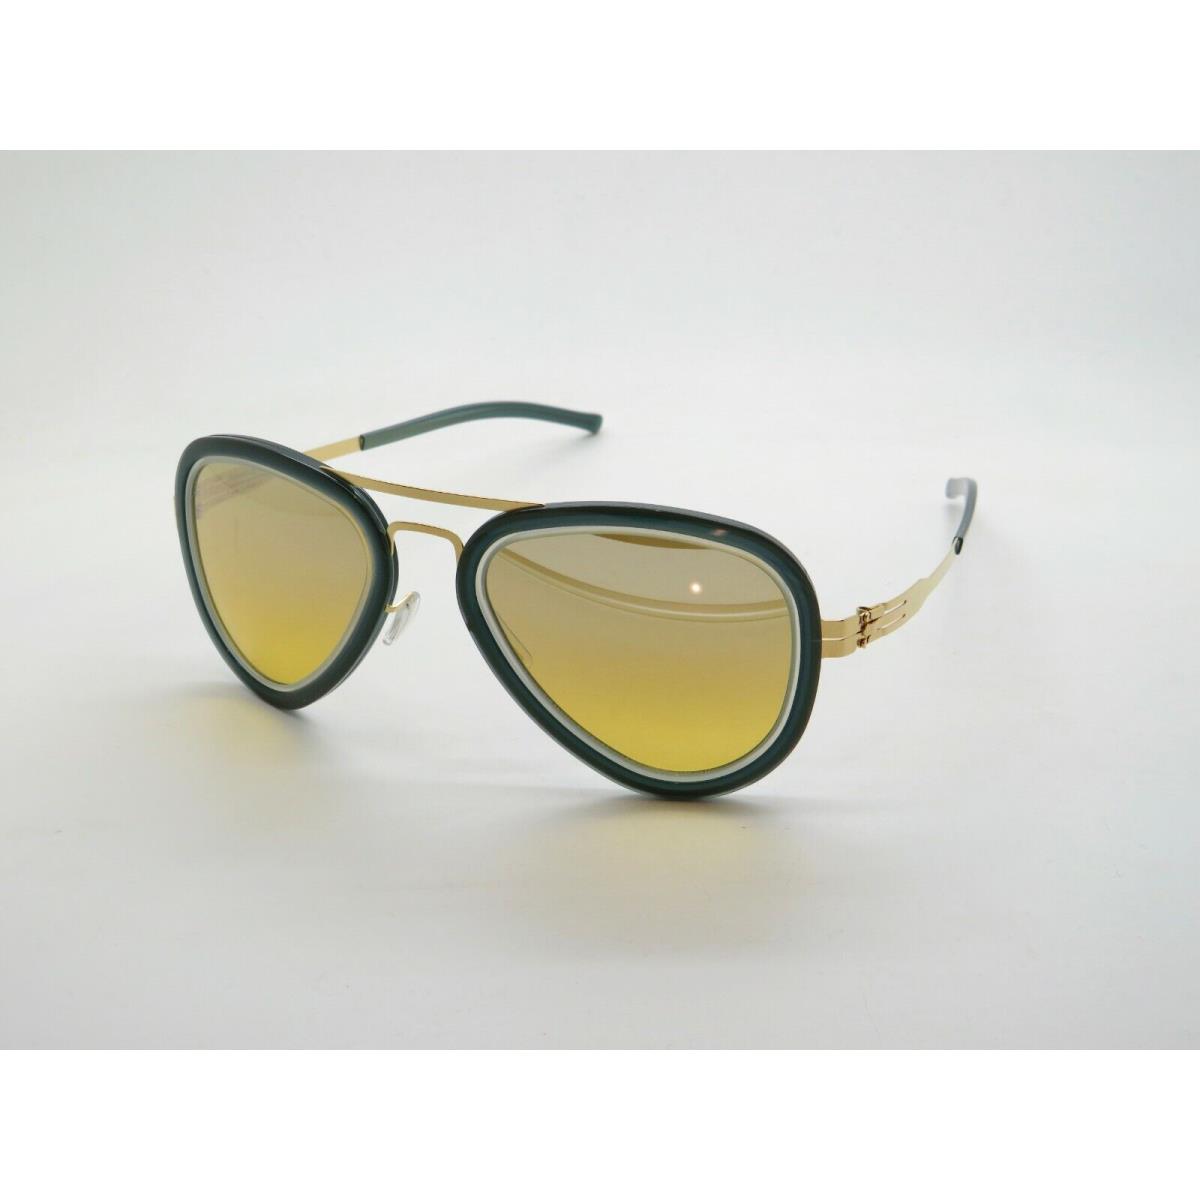 ic! berlin sunglasses Rinaldo - Frame: Matte Gold/Rocket Fuel, Lens: Yellow Dust Mirrored 0